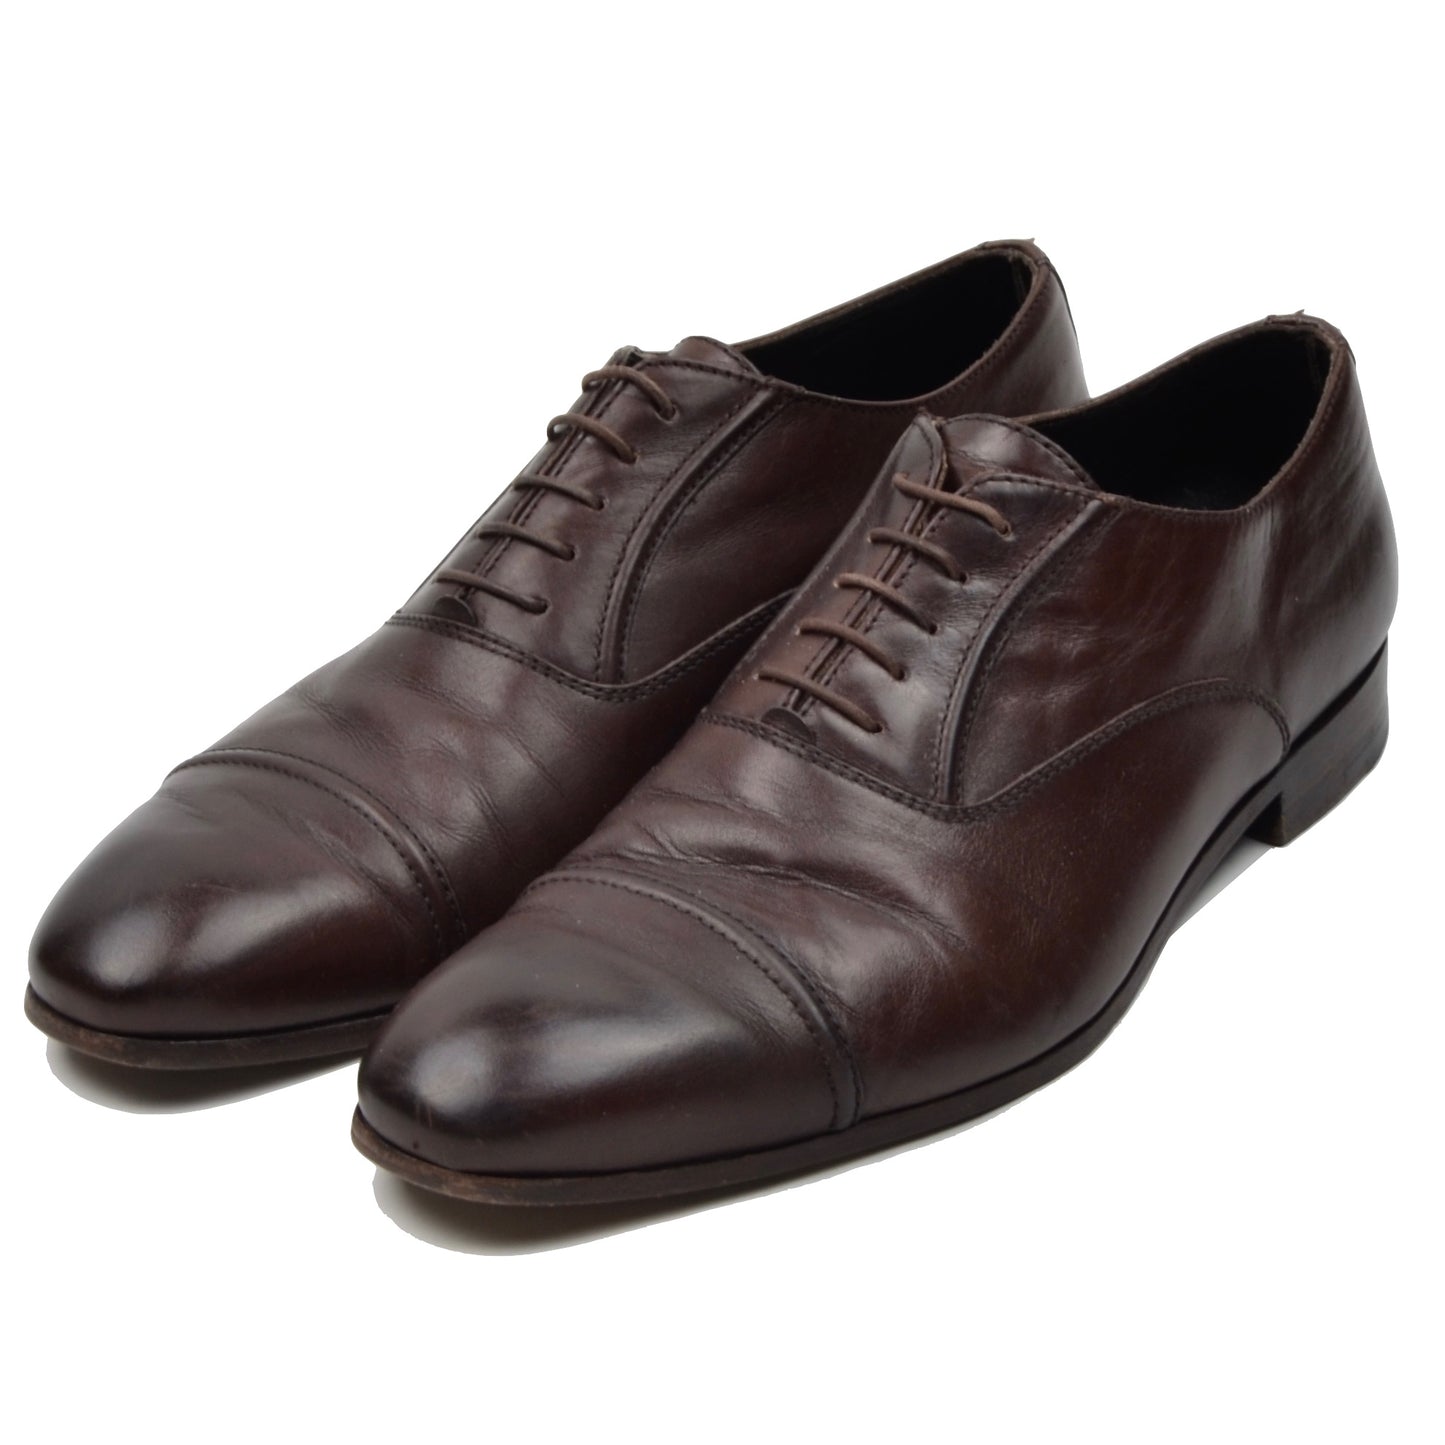 Ermenegildo Zegna Leather Shoes Size 9 EE - Brown